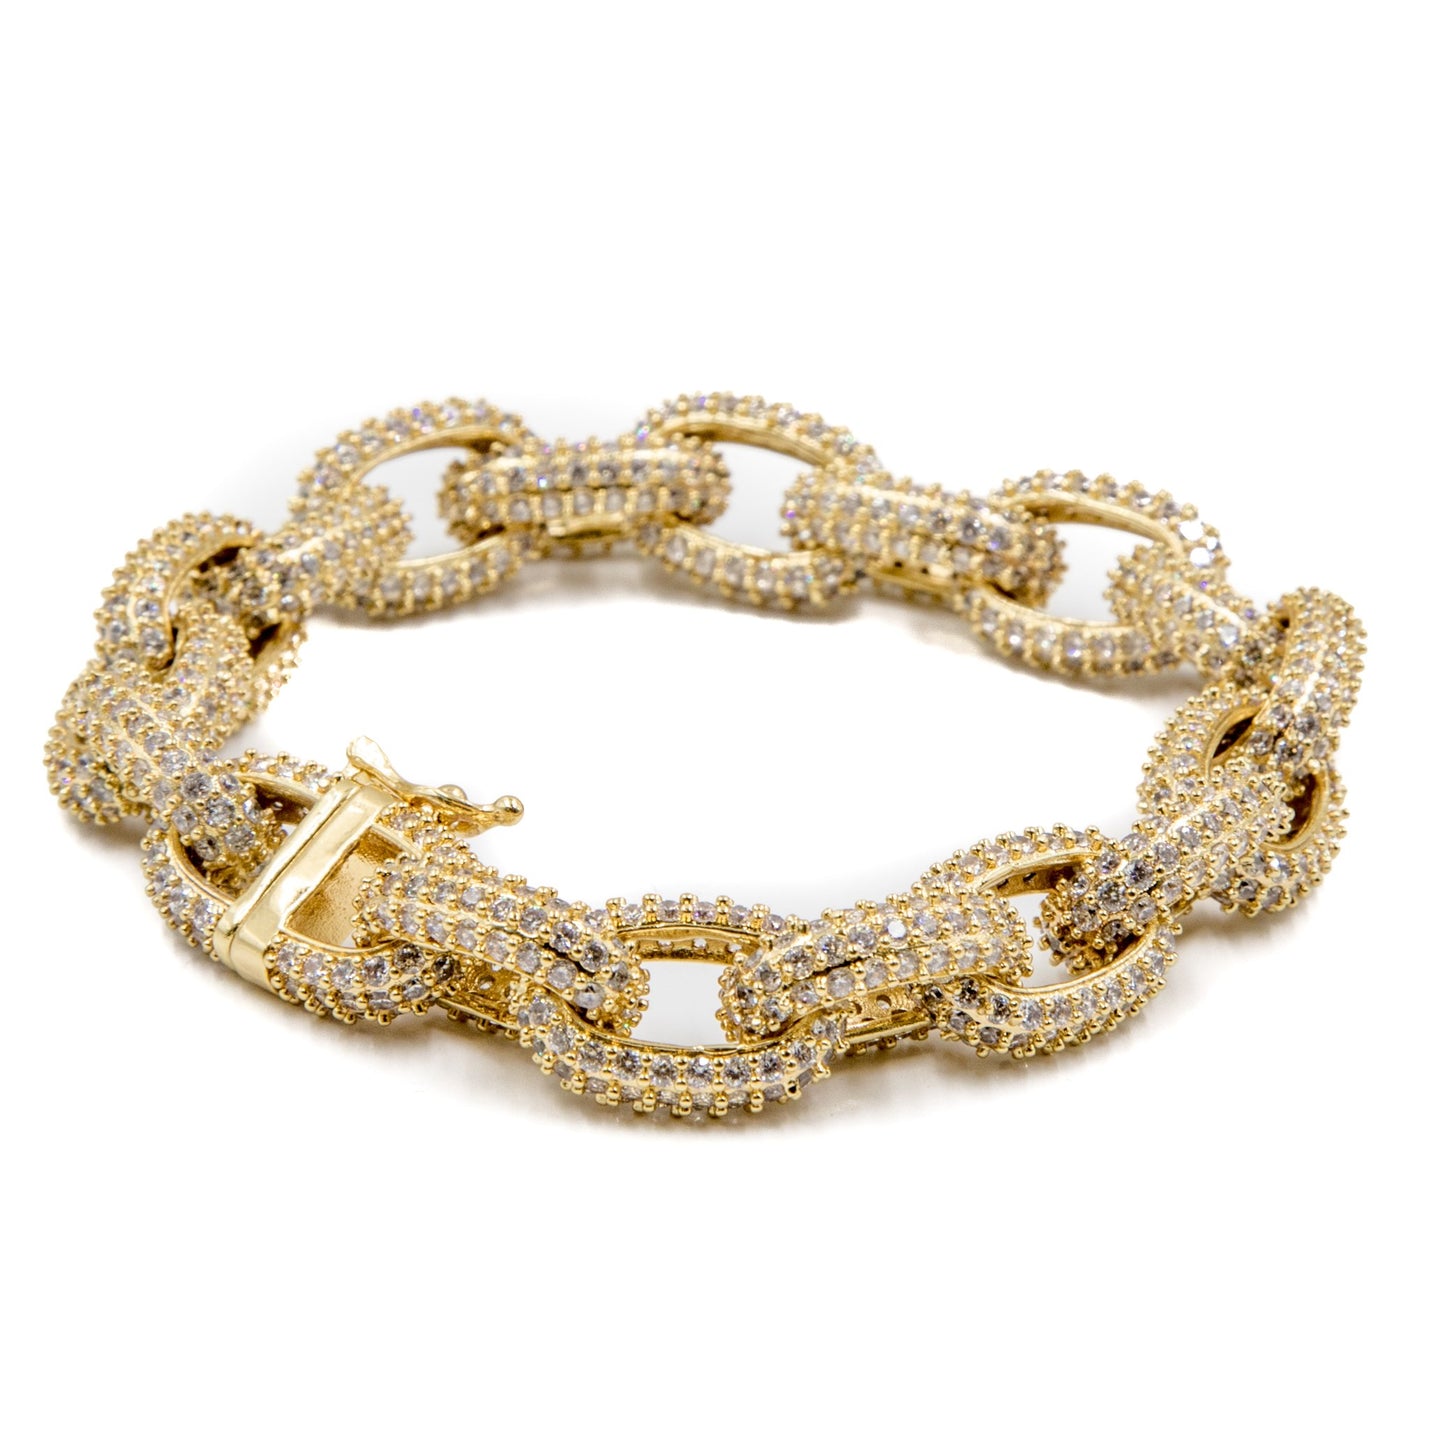 Studded Chain Link Rolo Bracelet - 18K Gold Plated - GOLDEN GILT